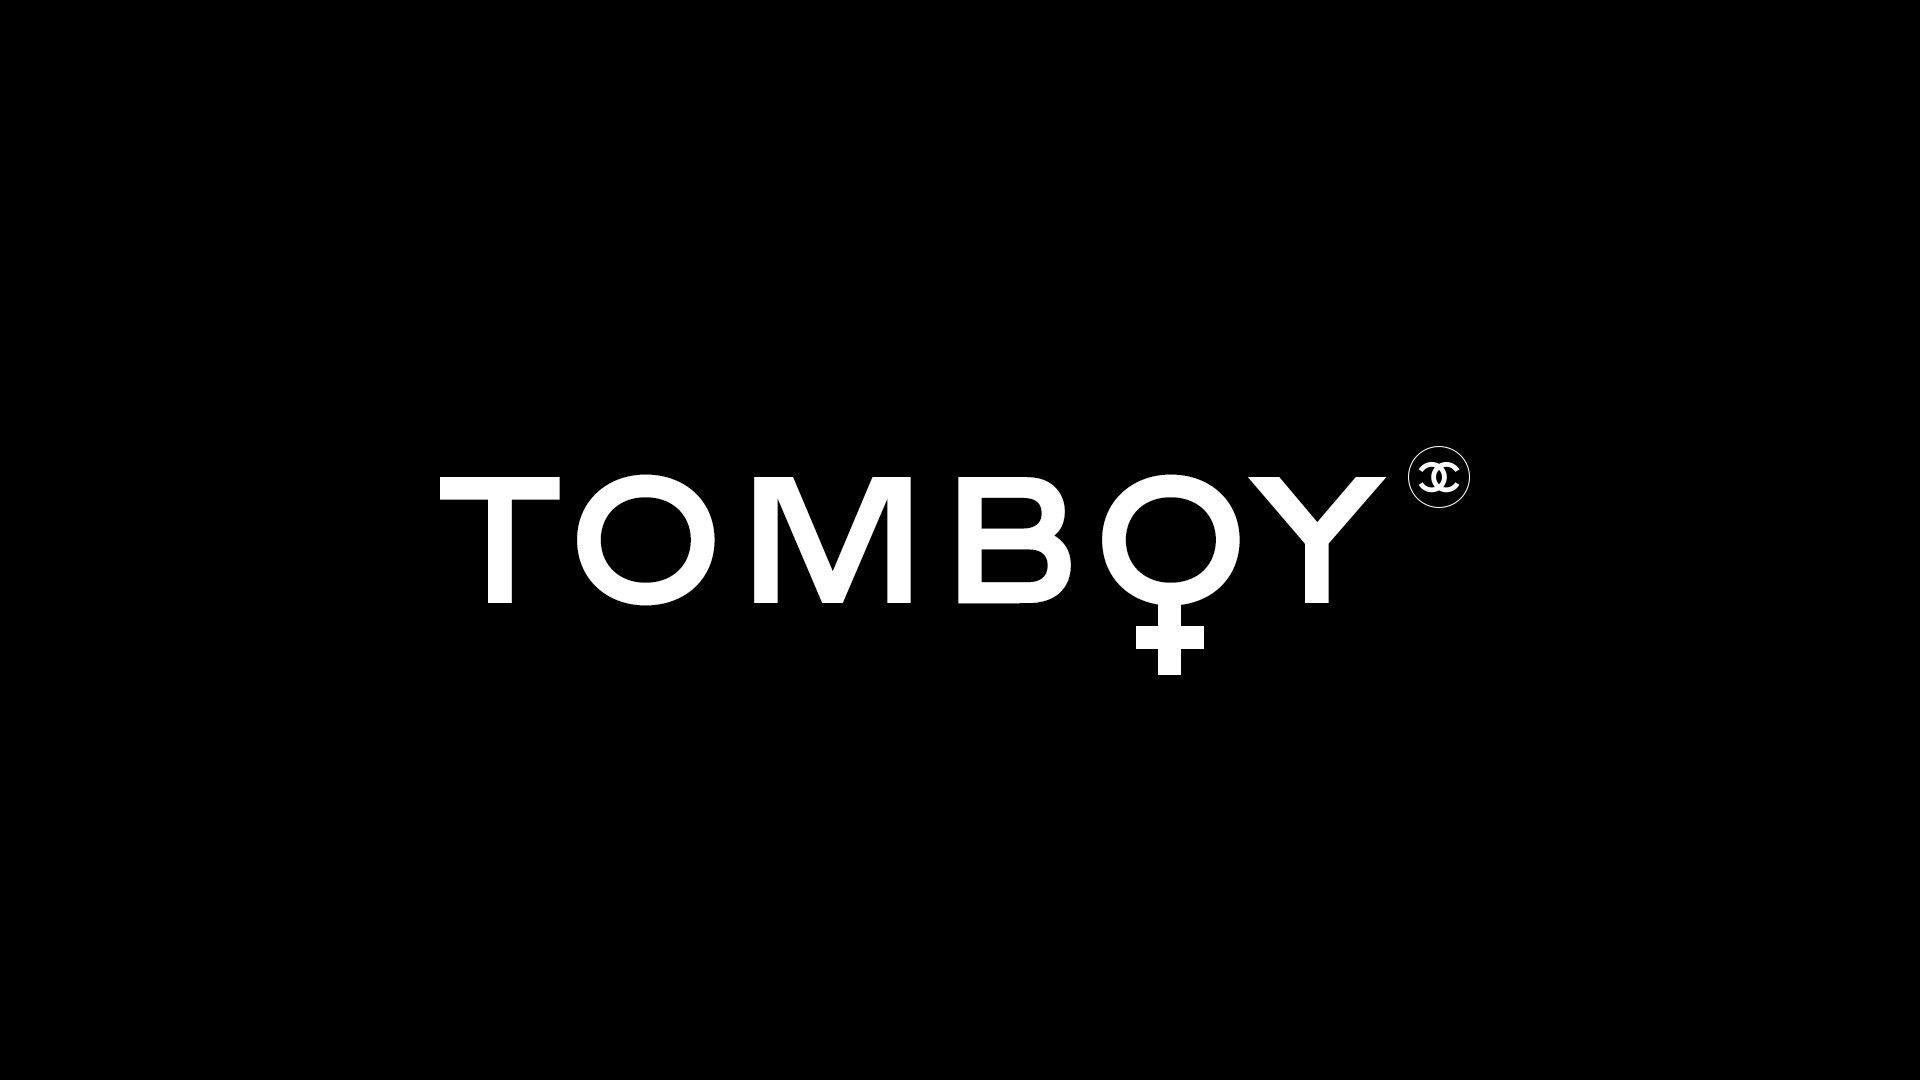 Cute Tomboy Wallpapers - Top Free Cute Tomboy Backgrounds ...